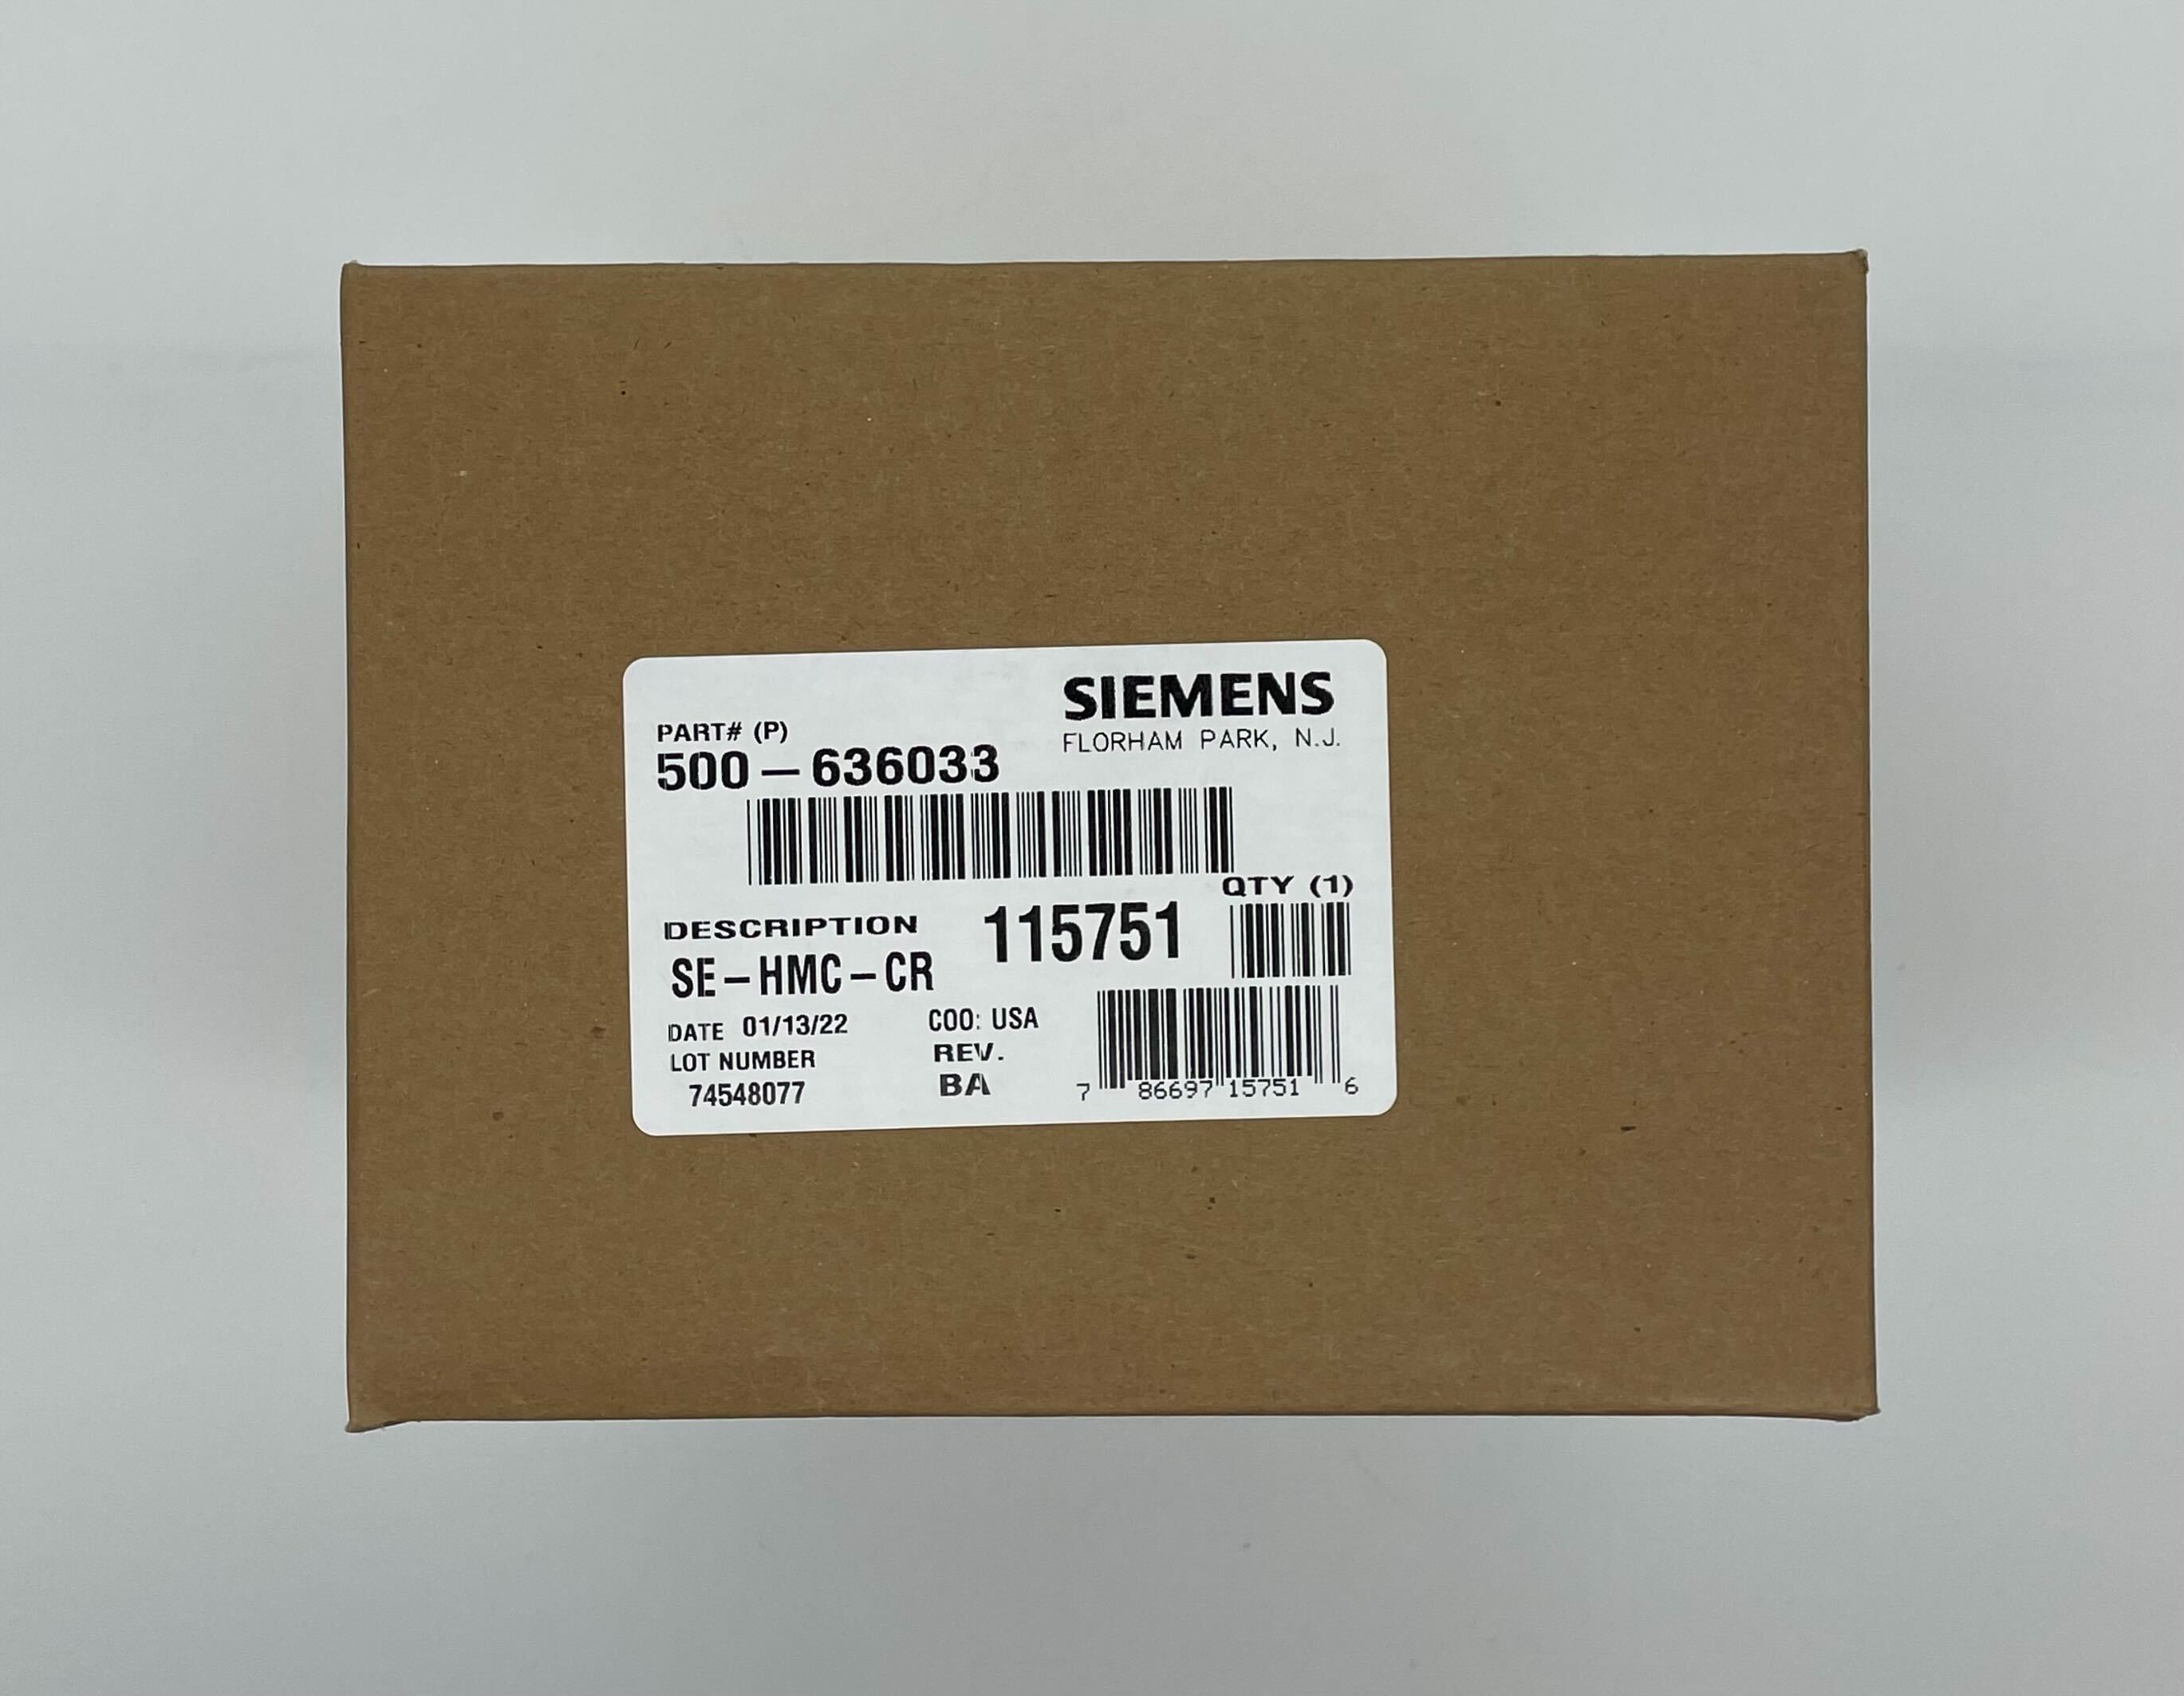 Siemens SE-HMC-CR